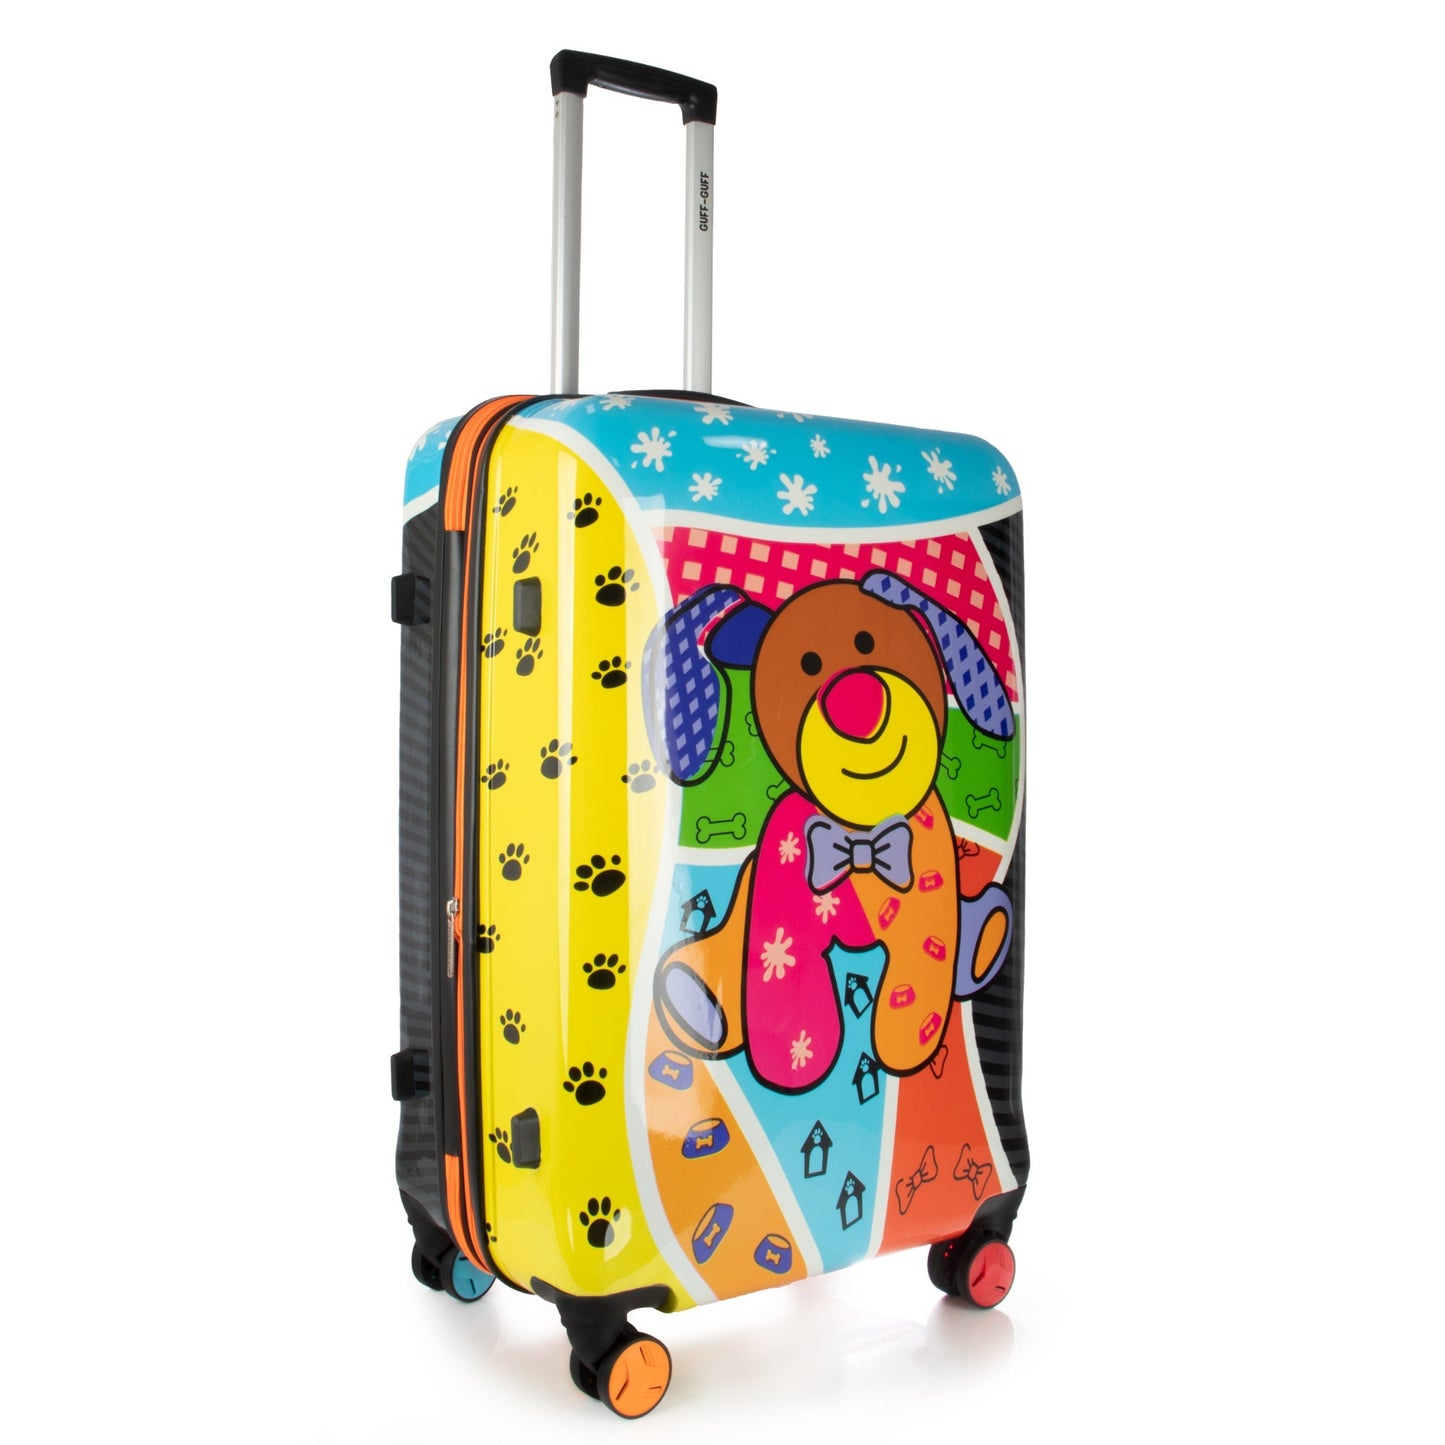 GUFF - GUFF Collection Rainbow Luggage 3 Piece Set